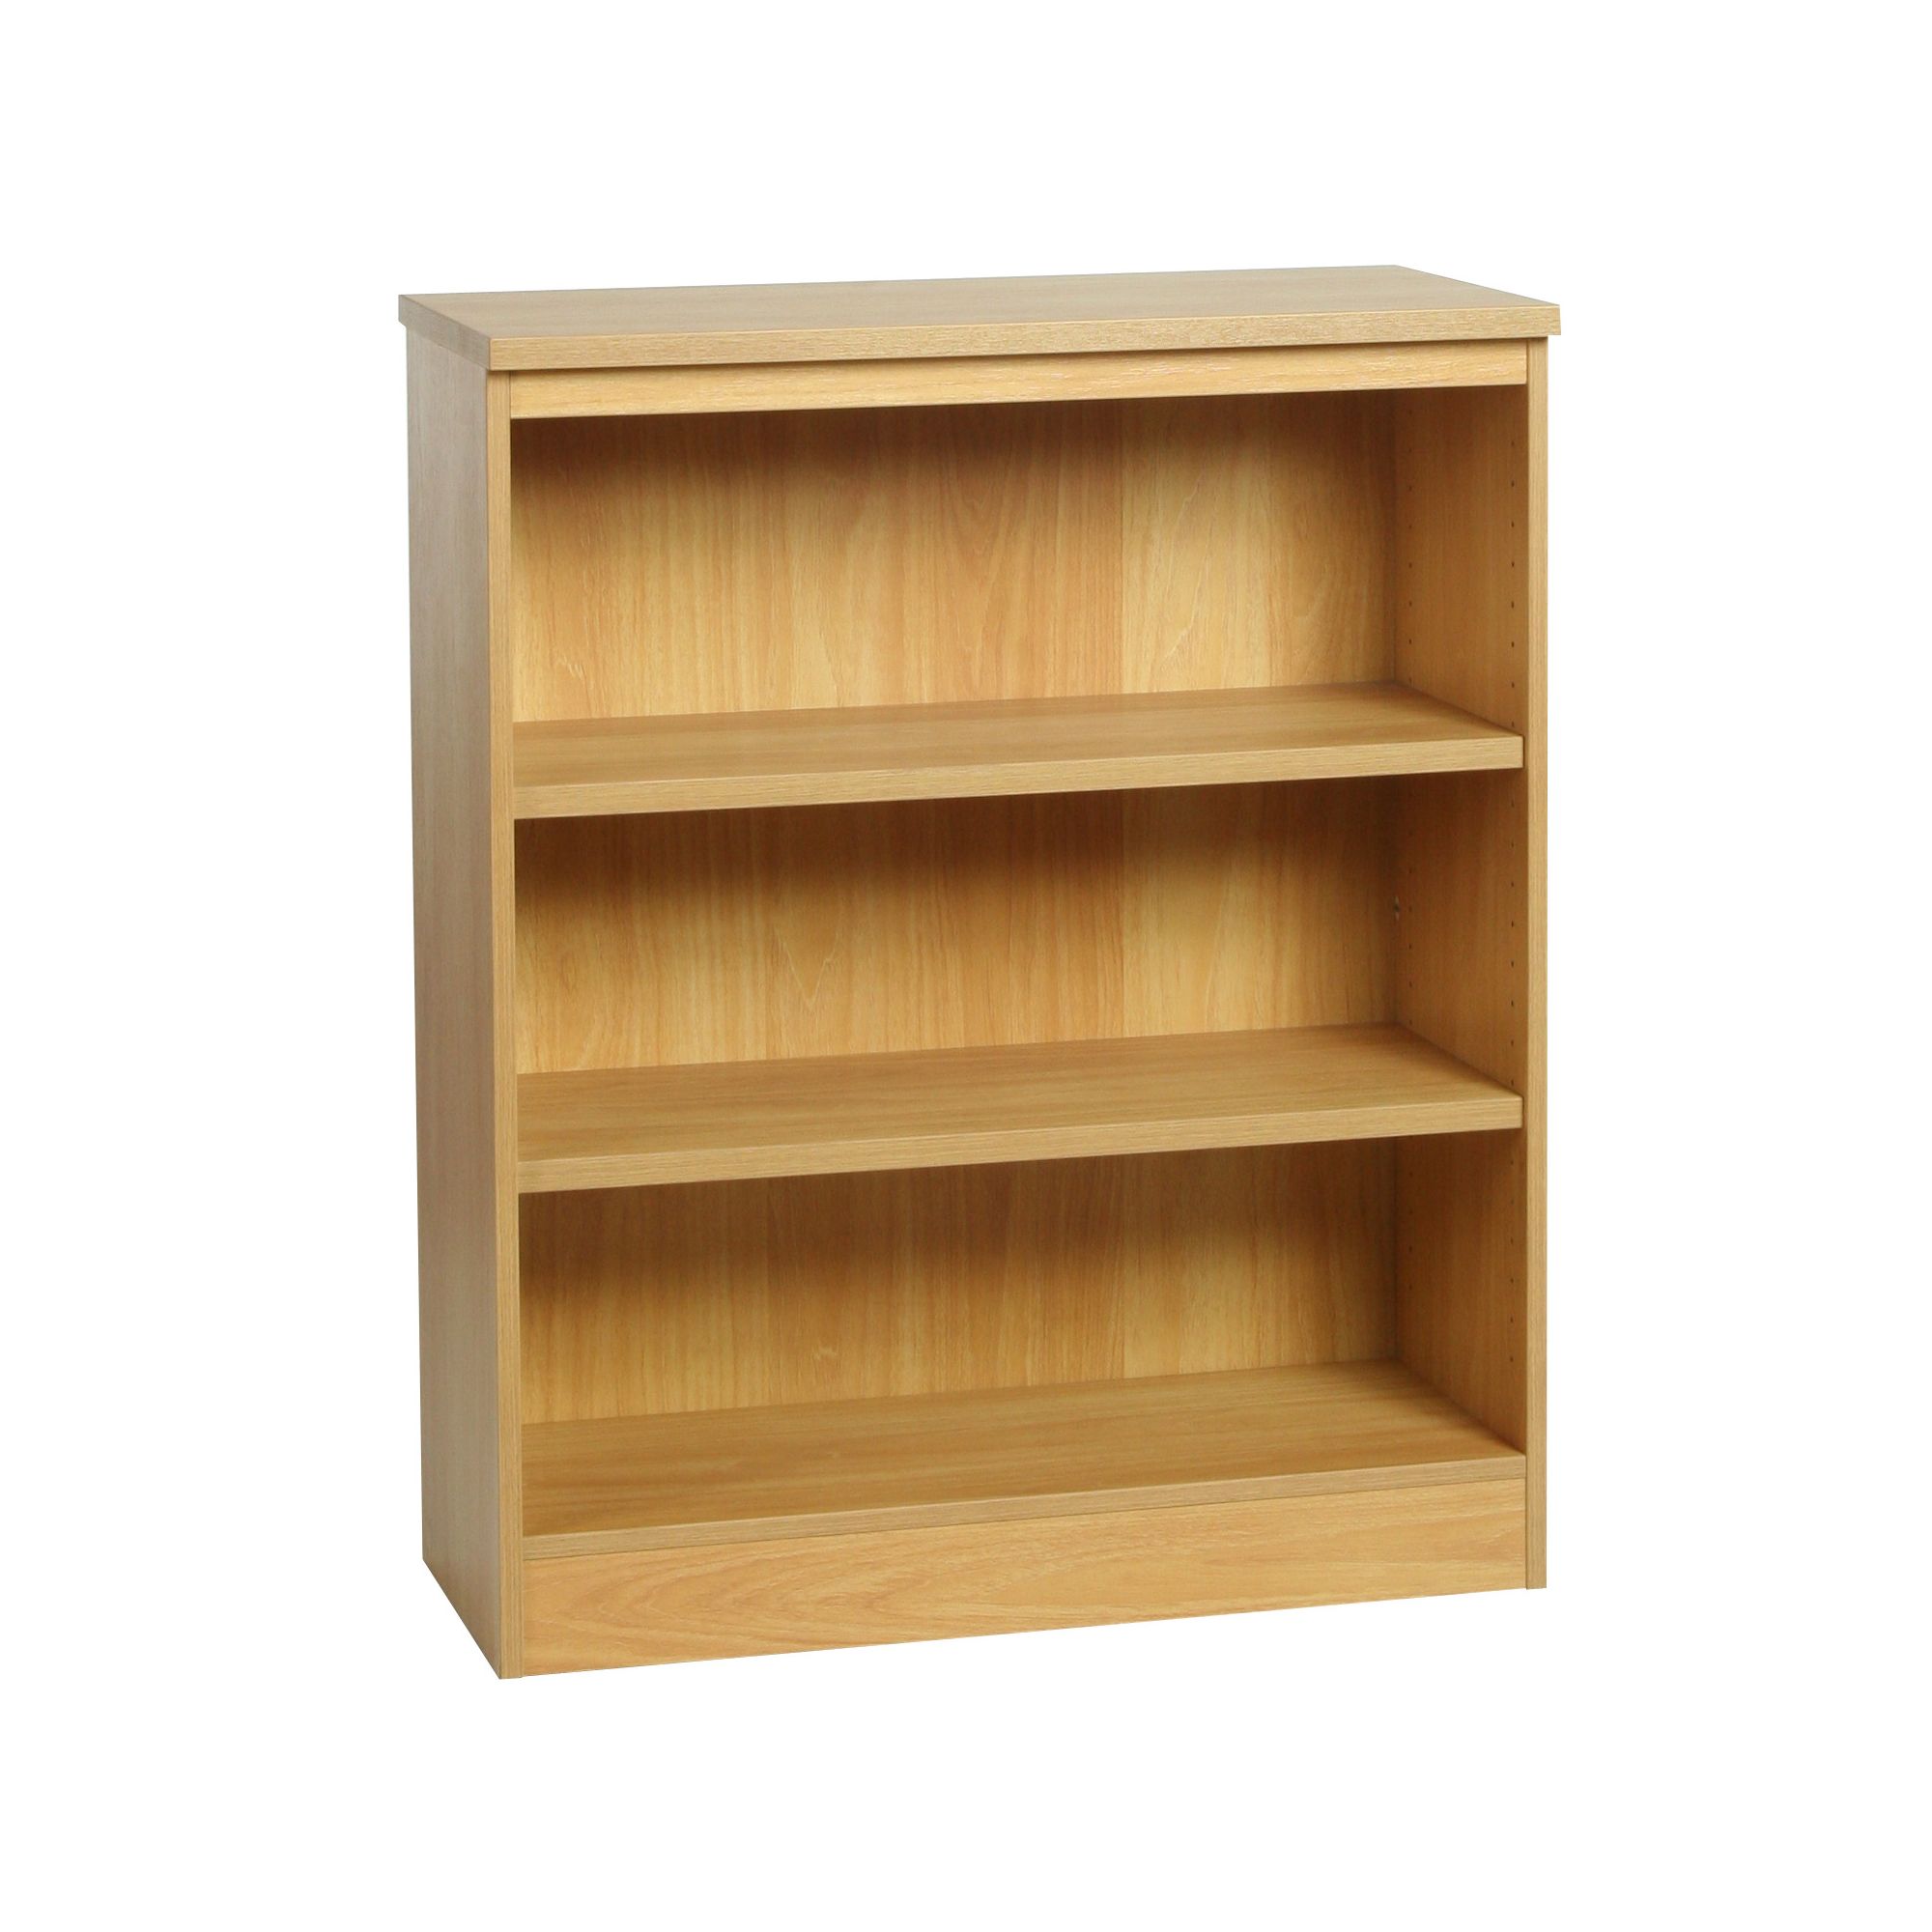 Enduro Three Shelf Wide Bookcase - English Oak at Tesco Direct